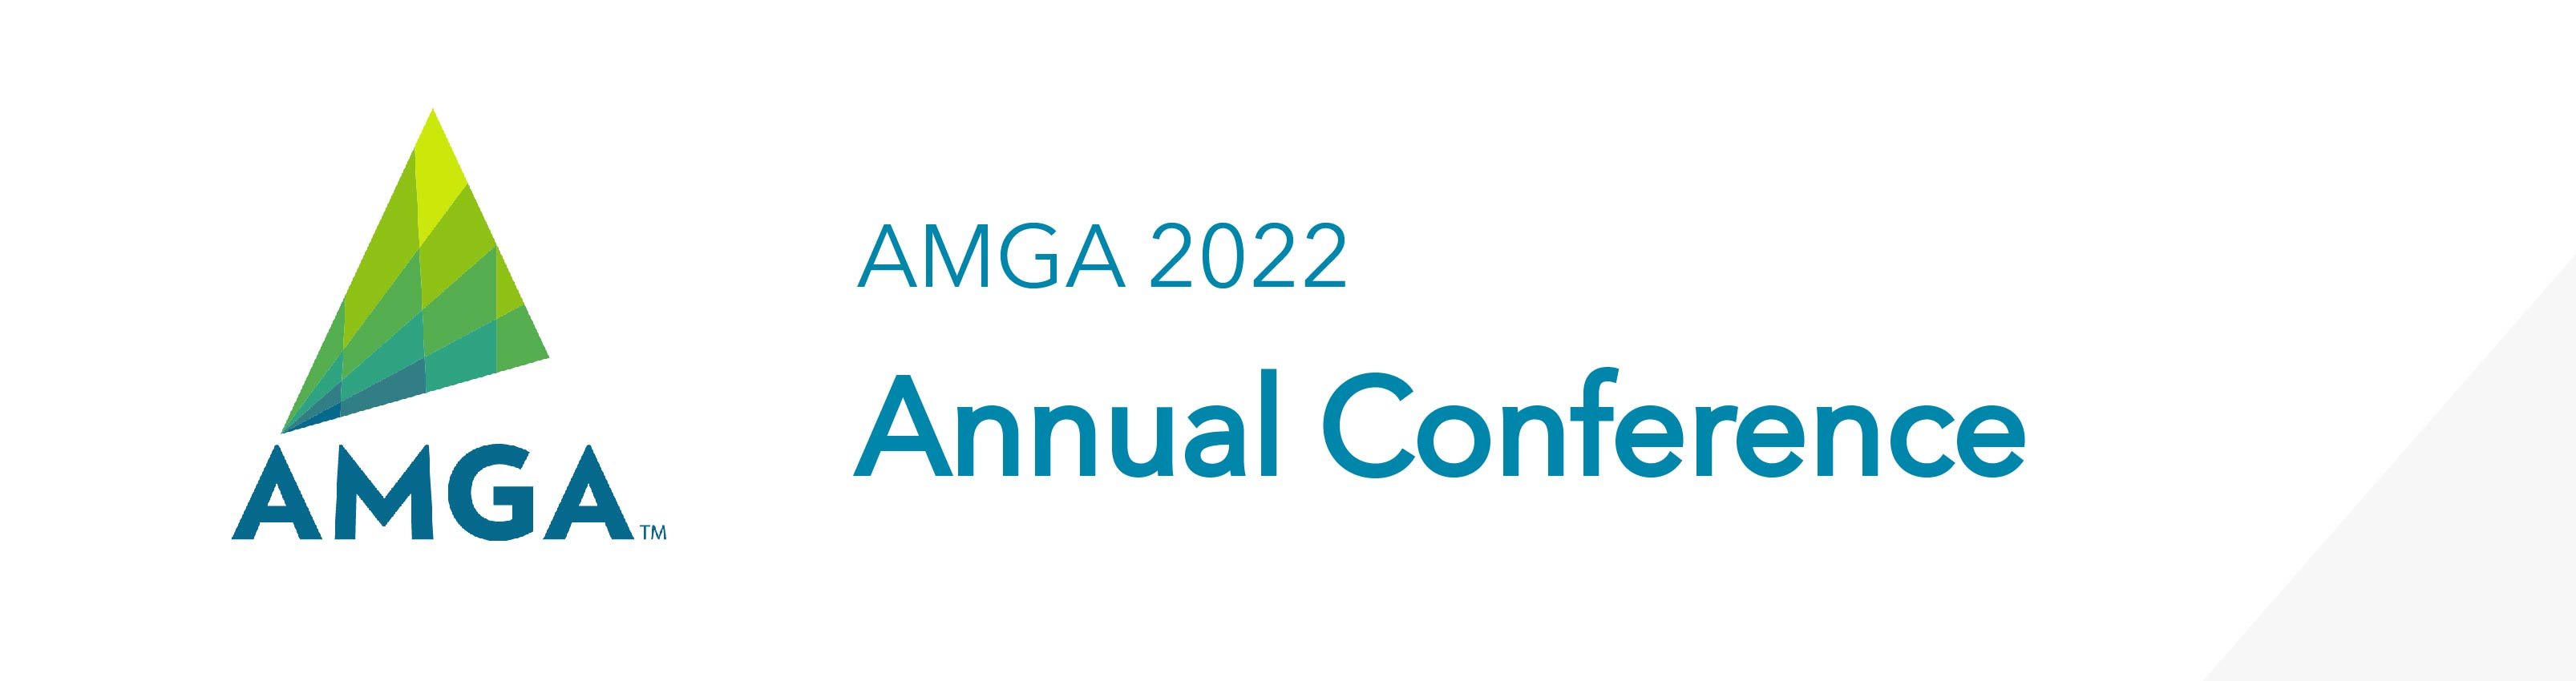 AMGA 2022 Conference Image-01